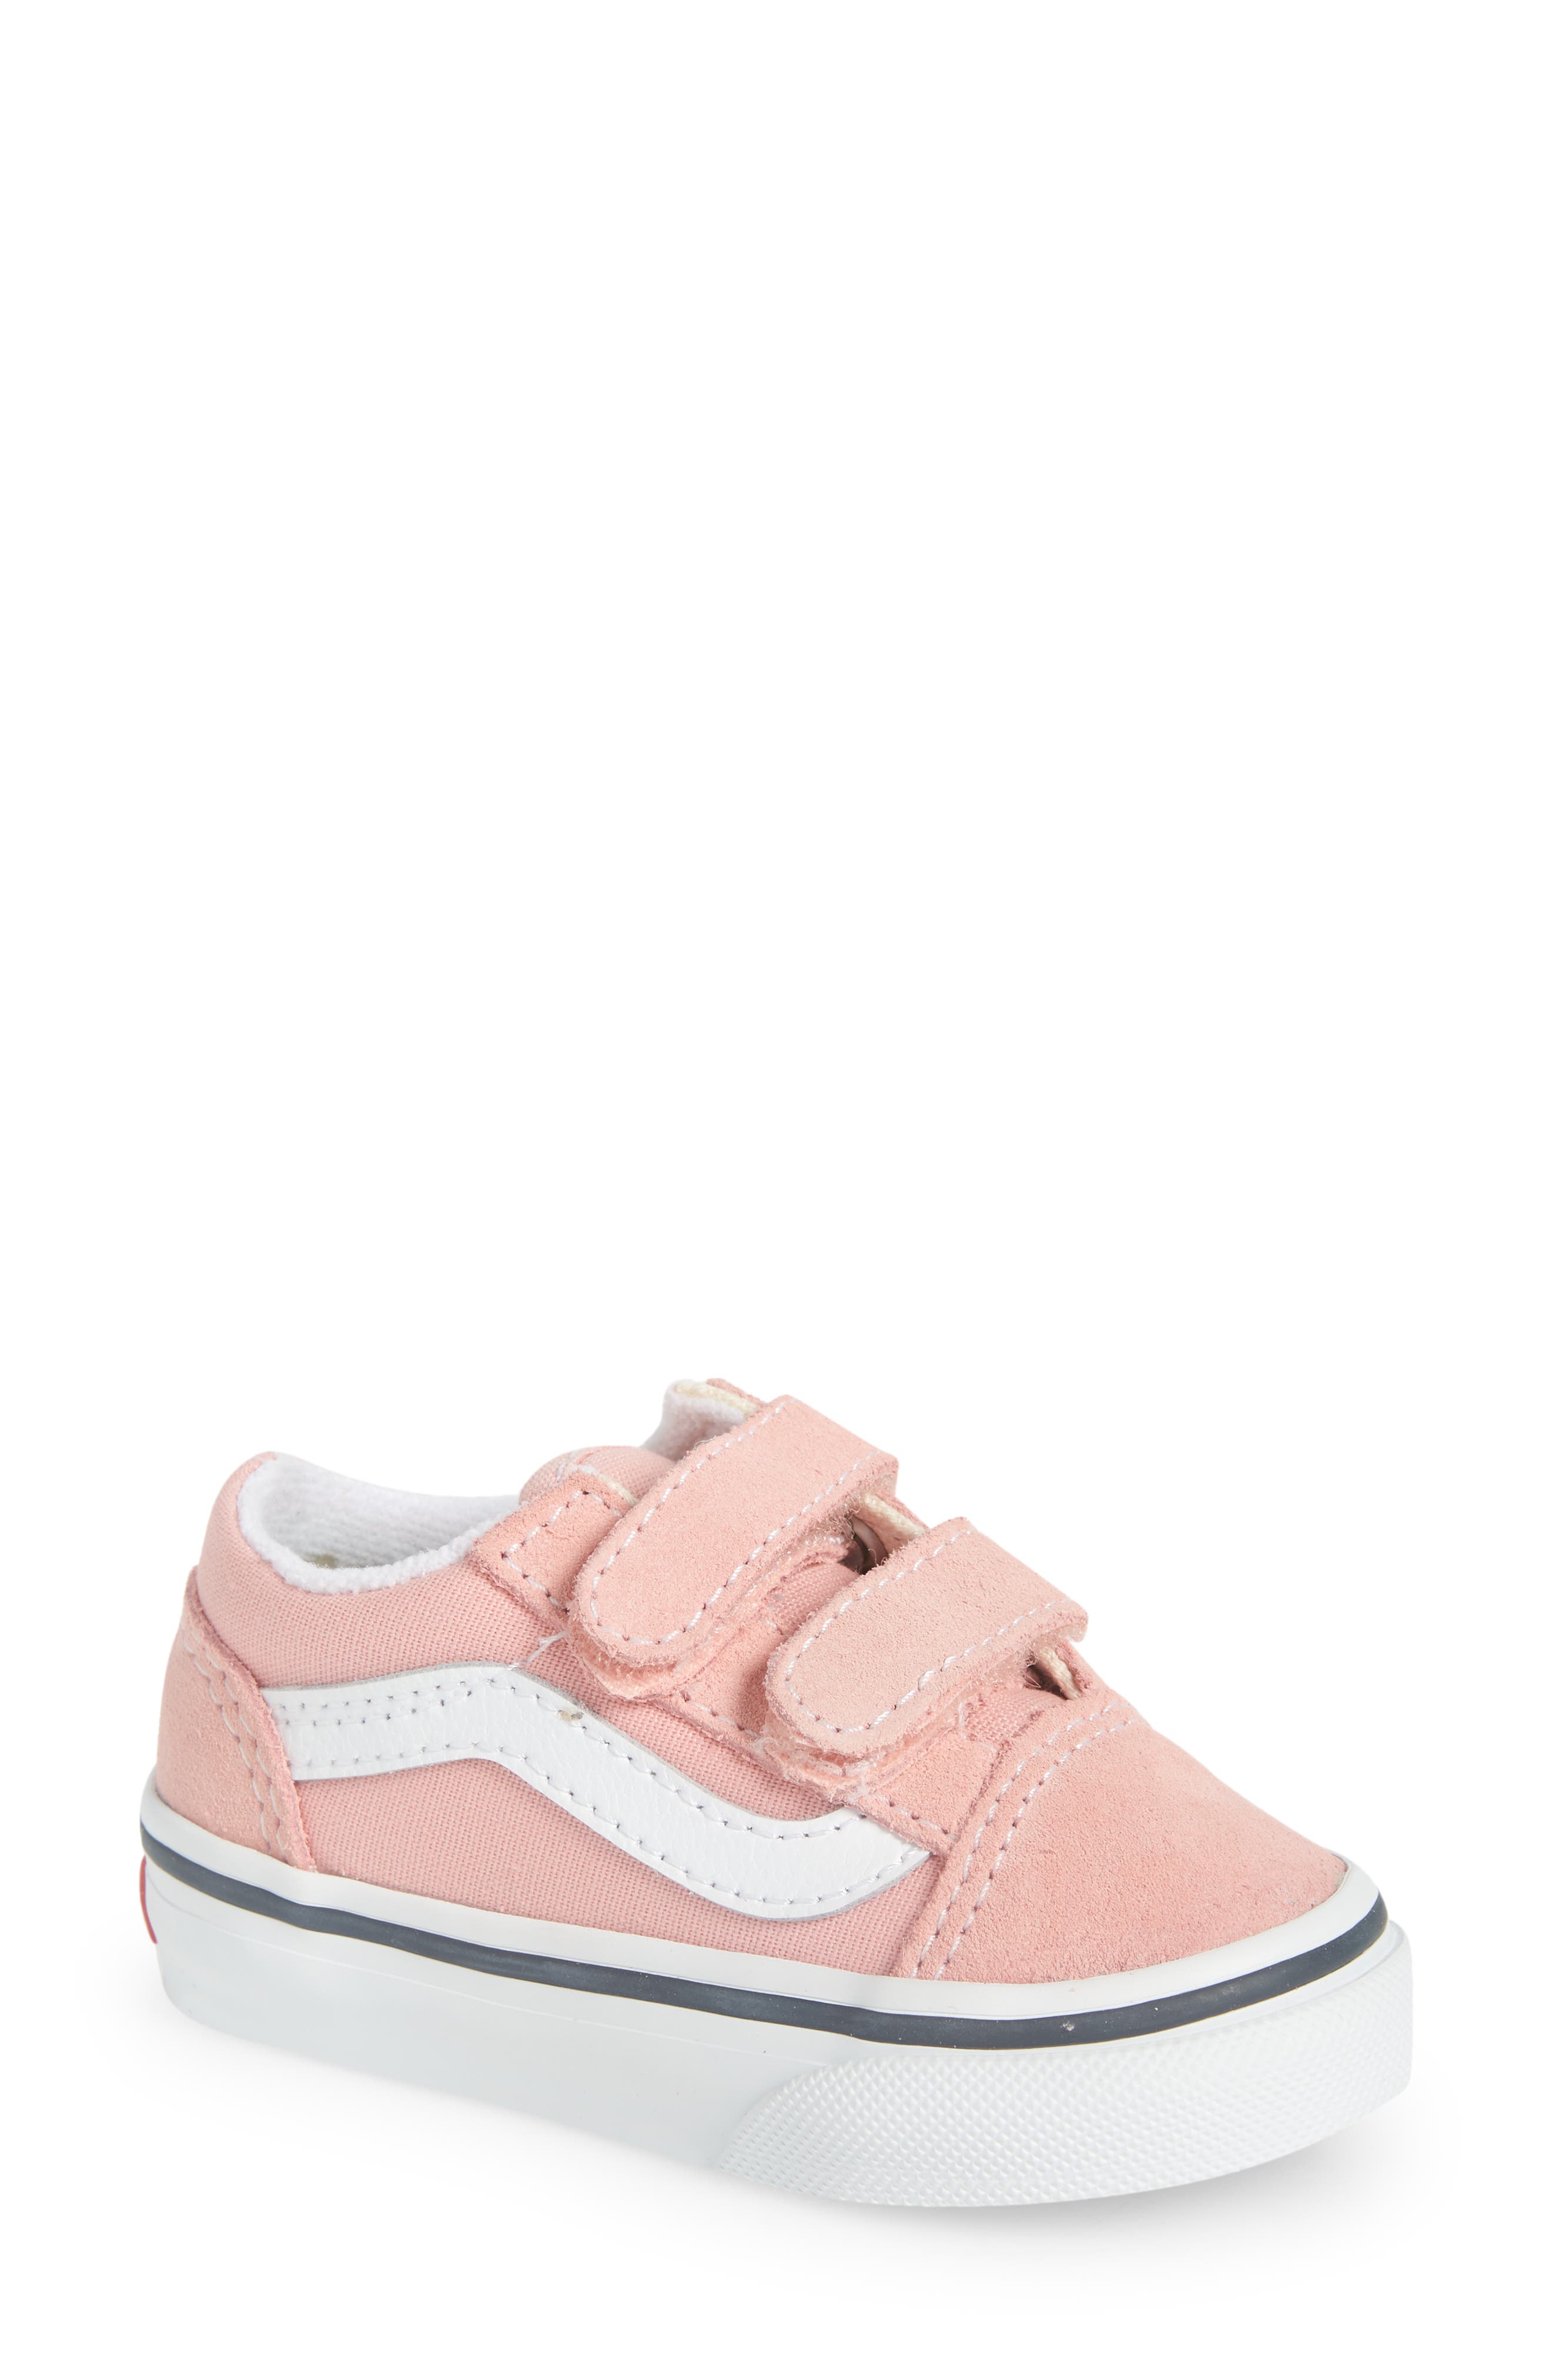 Baby Vans, Walker \u0026 Toddler Shoes 